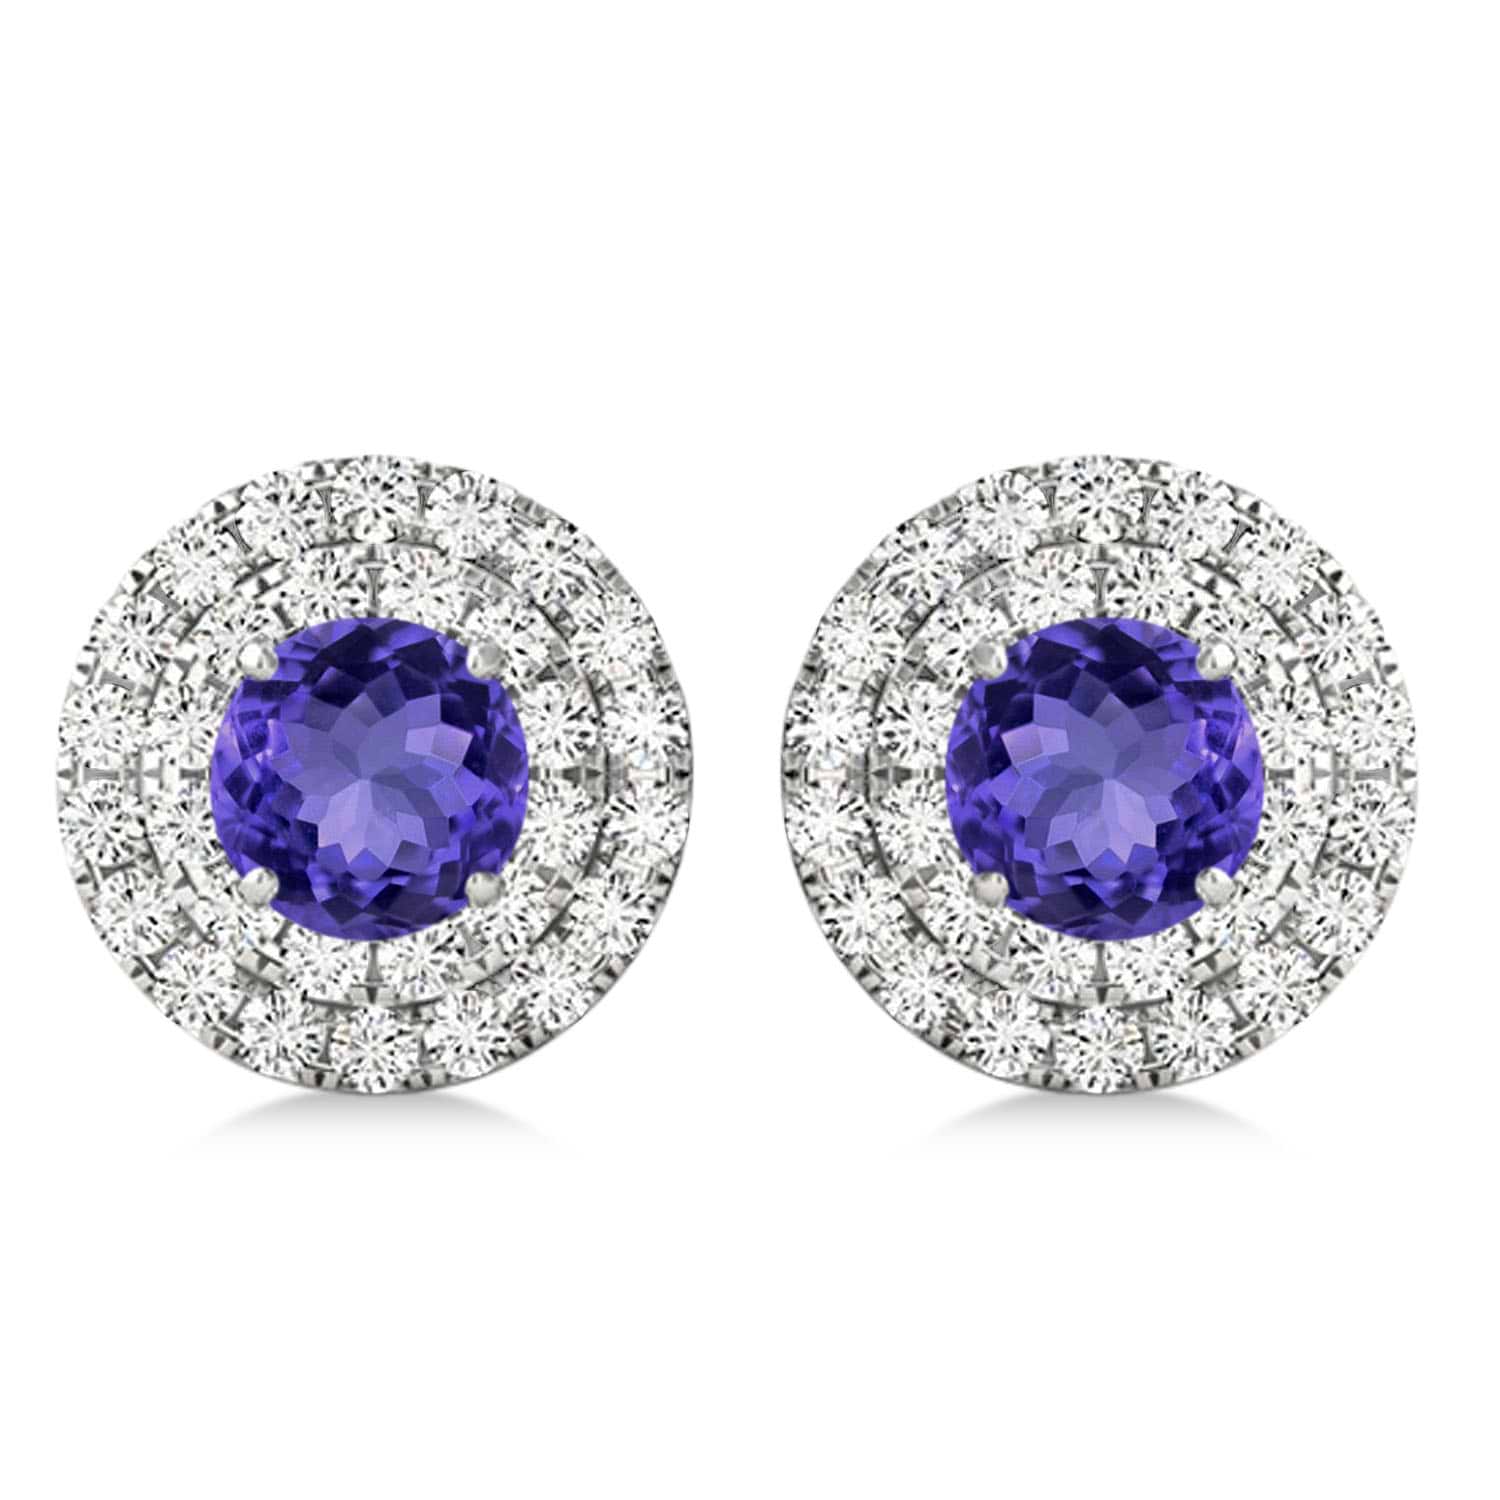 Round Double Halo Diamond & Tanzanite Earrings 14k White Gold 1.65ct